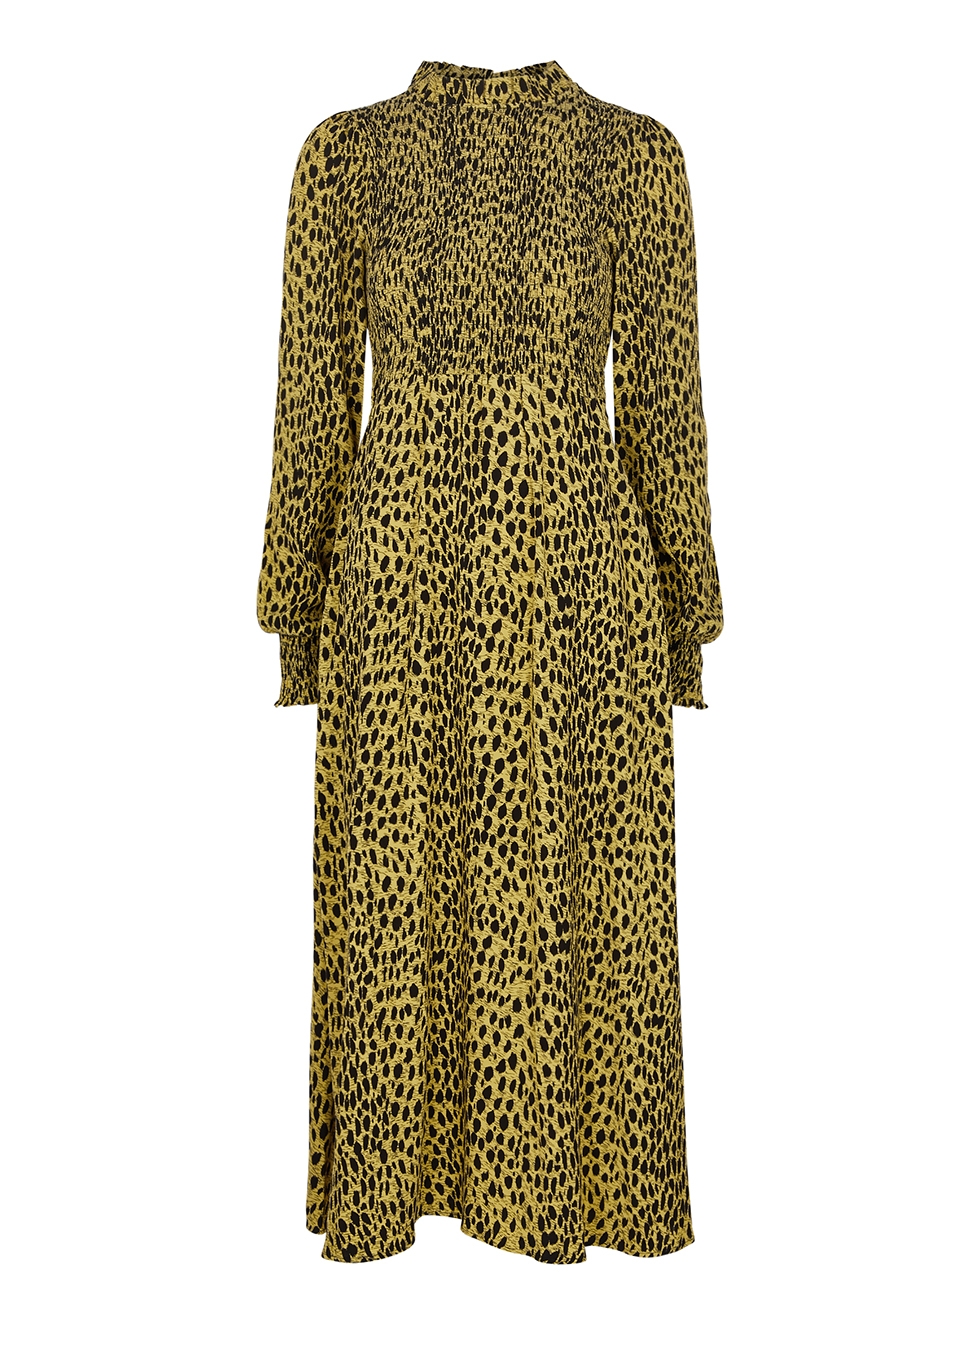 Kitri Molly leopard-print dress - Harvey Nichols